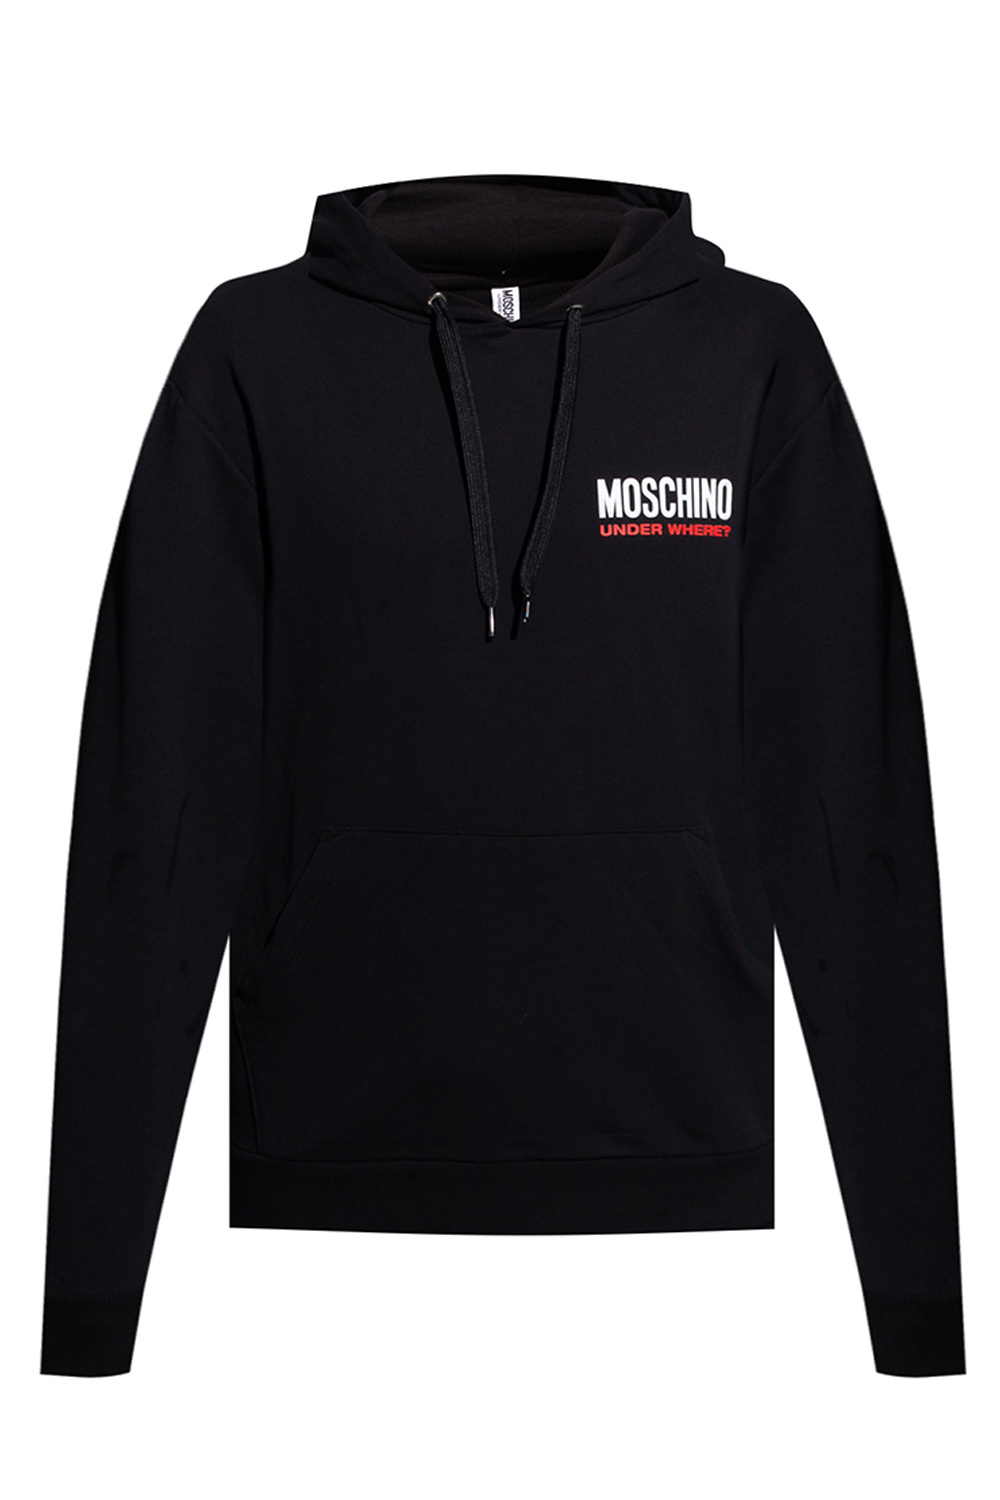 Black Hoodie with logo Moschino - Vitkac Canada